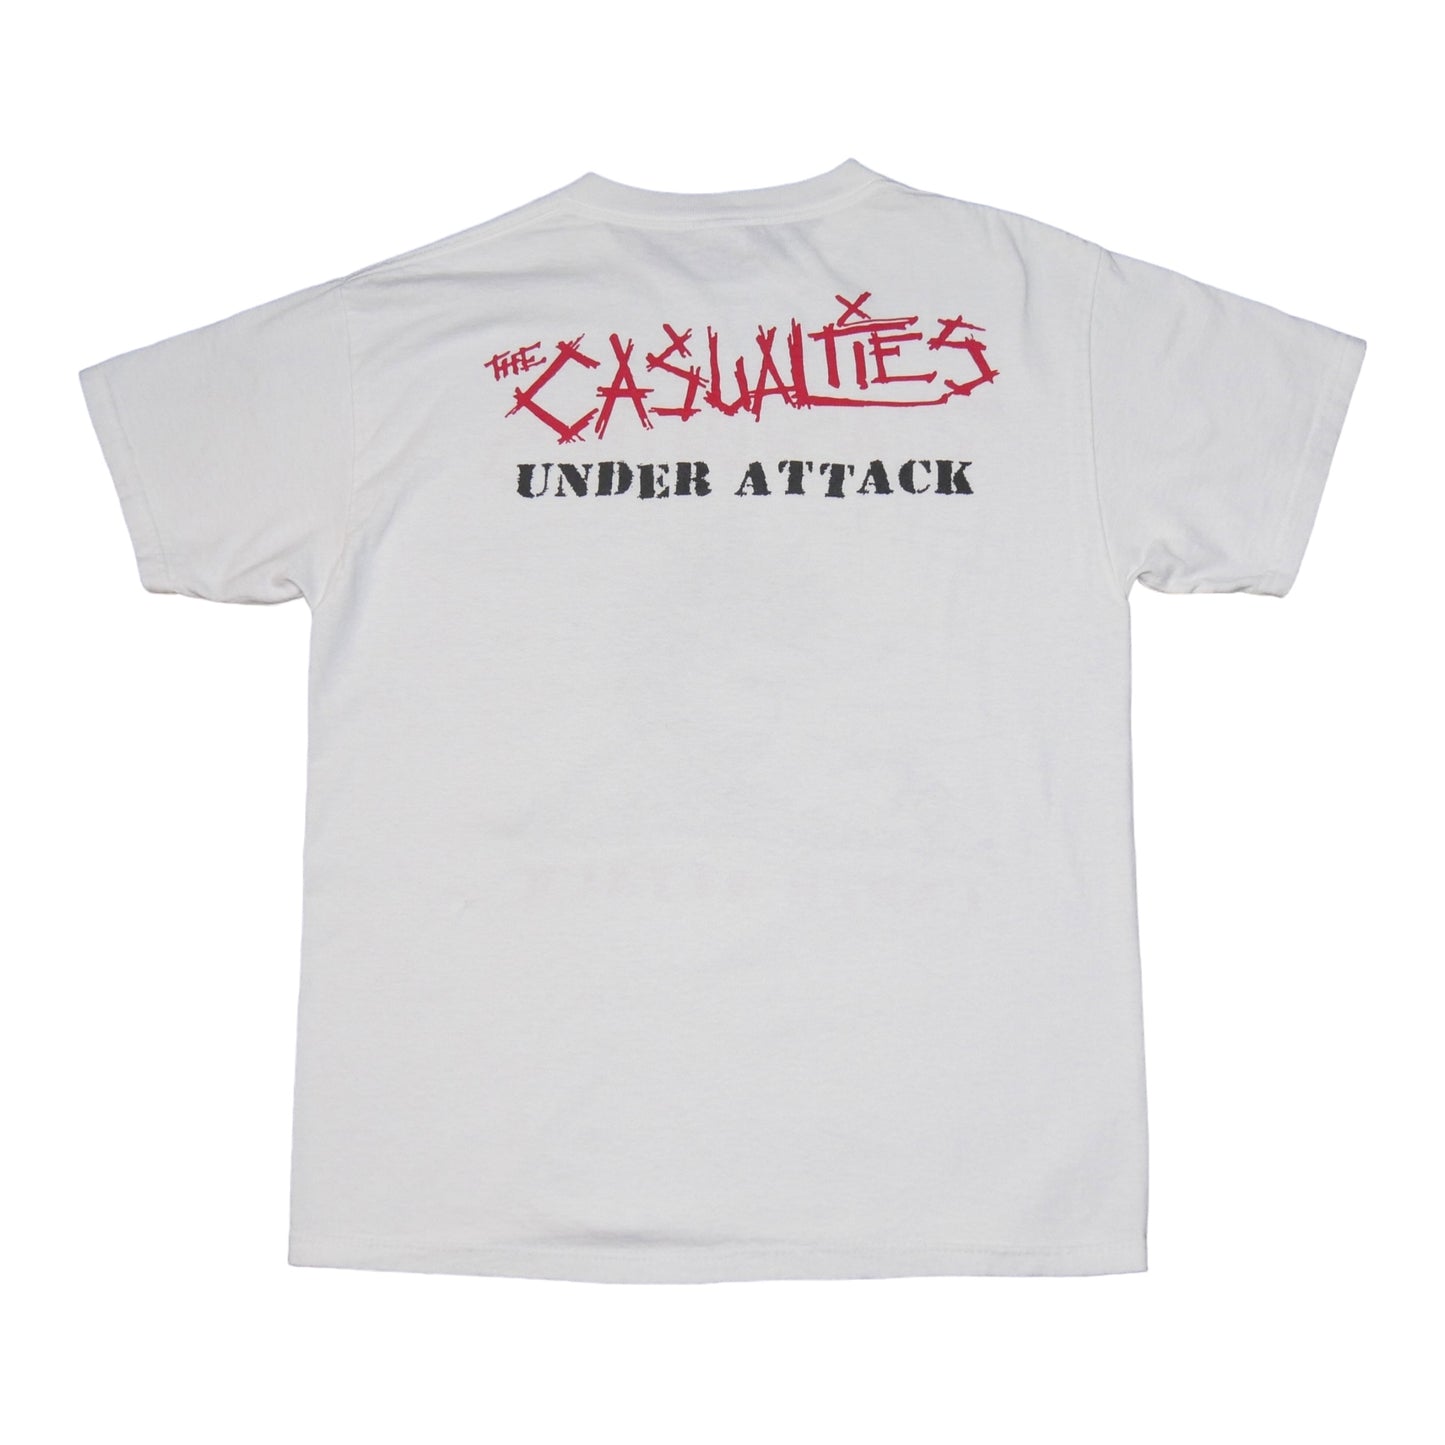 The Casualties Under Attack Shirt - Medium